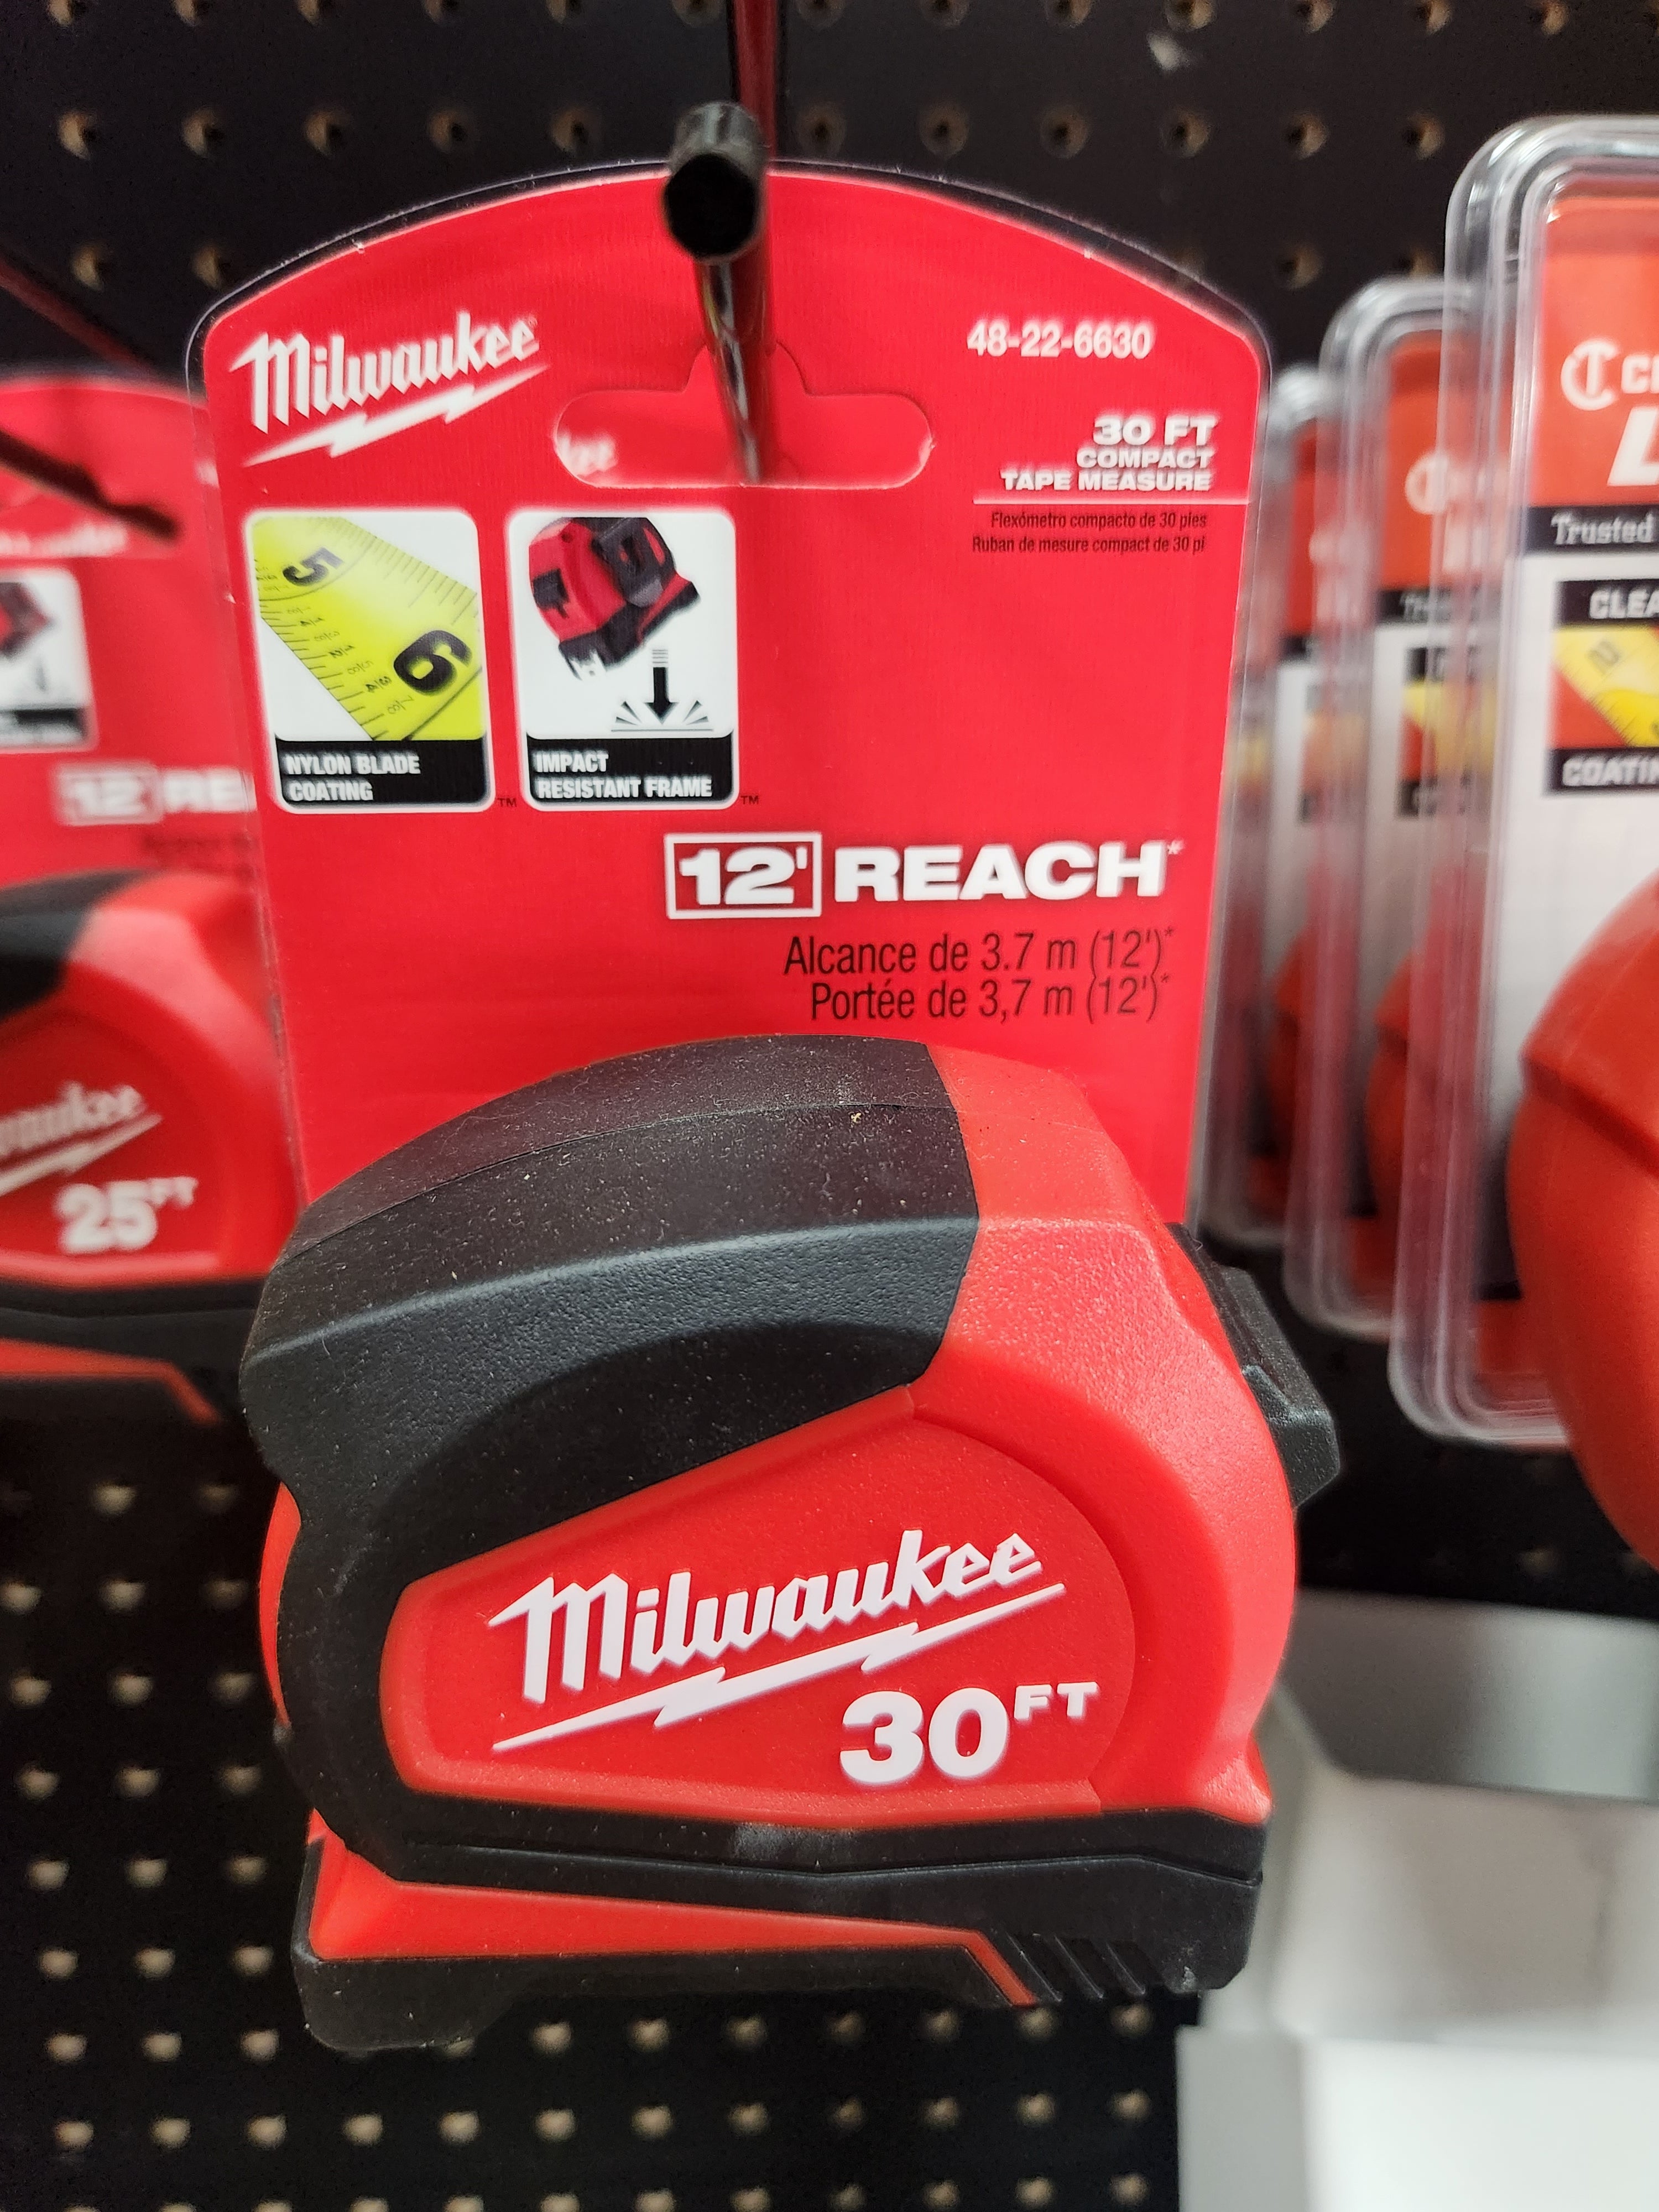 Milwaukee Compact Tape Measures 30ft 48-22-6630